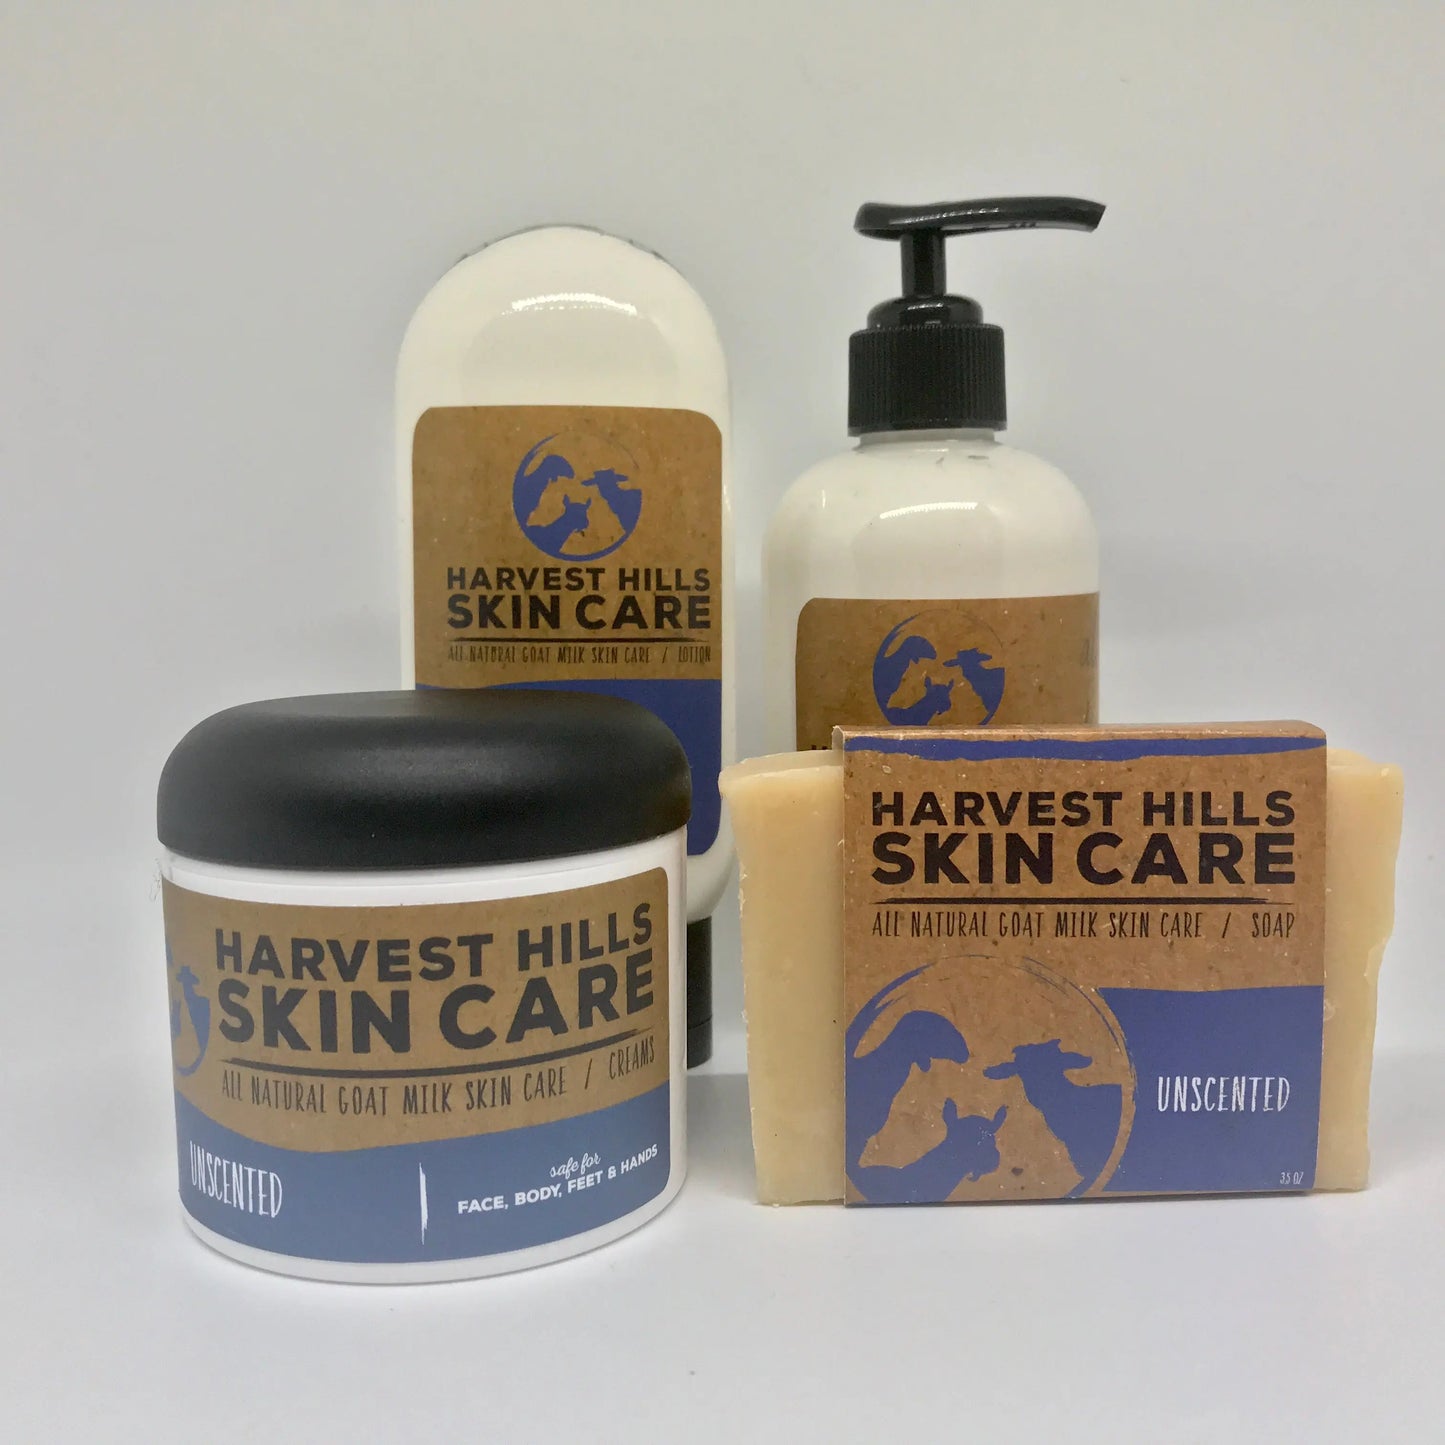 Unscented Face & Body Soap Harvest Hills Skin Care All Natural Goat Milk Skin Care